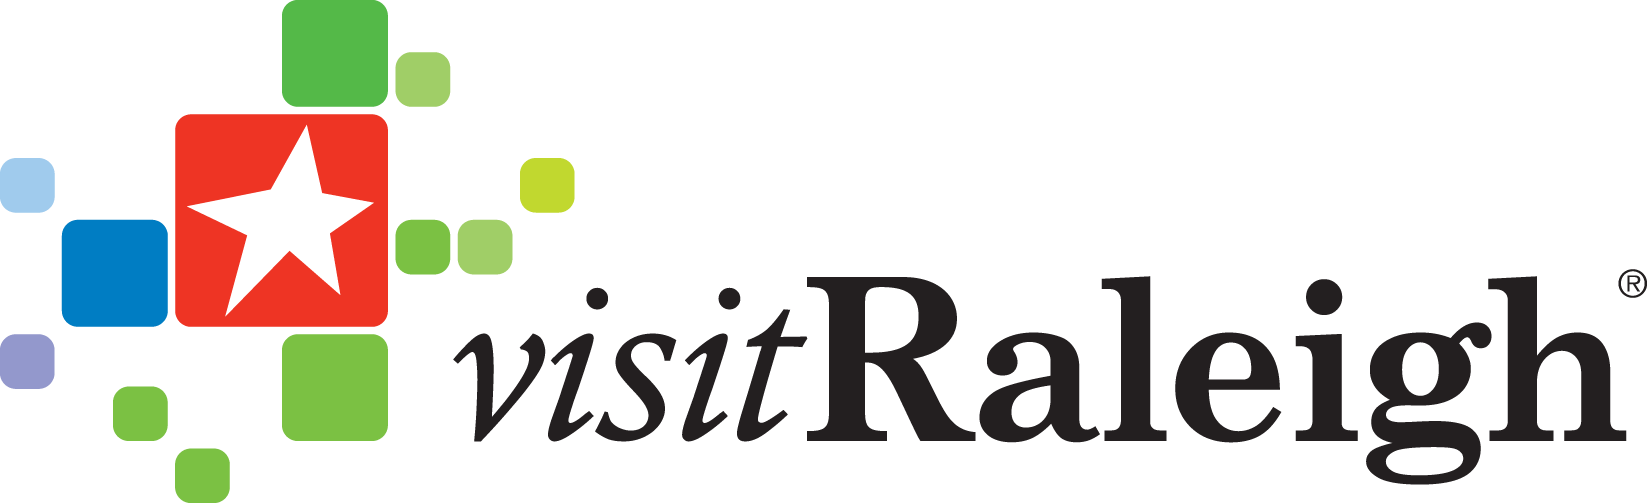 visitRaleigh-logo-color